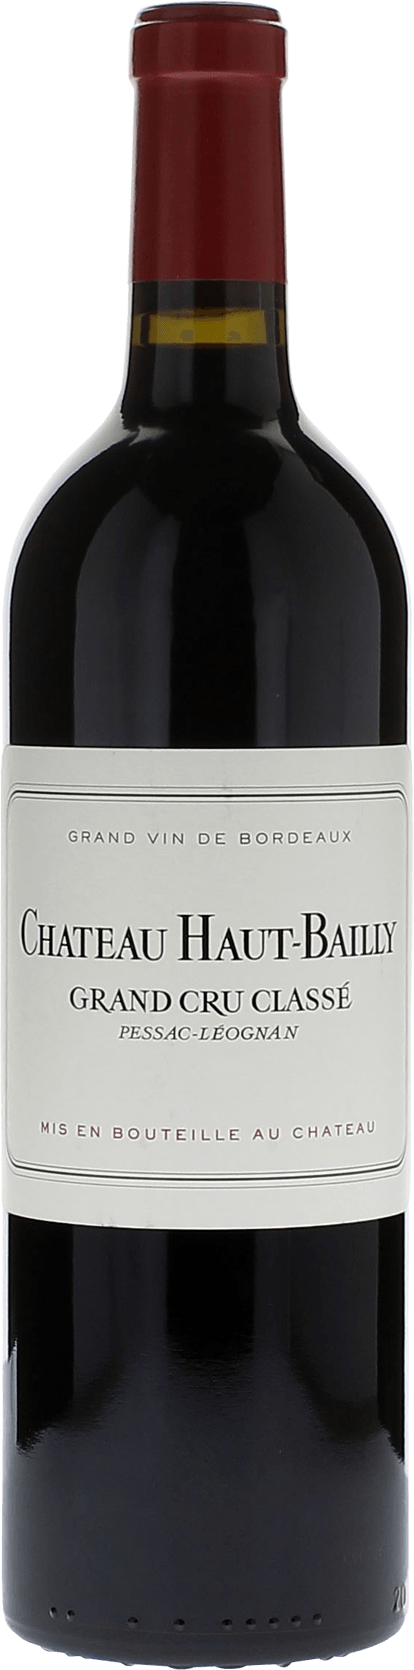 Haut bailly 1986 cru class Pessac-Lognan, Bordeaux rouge